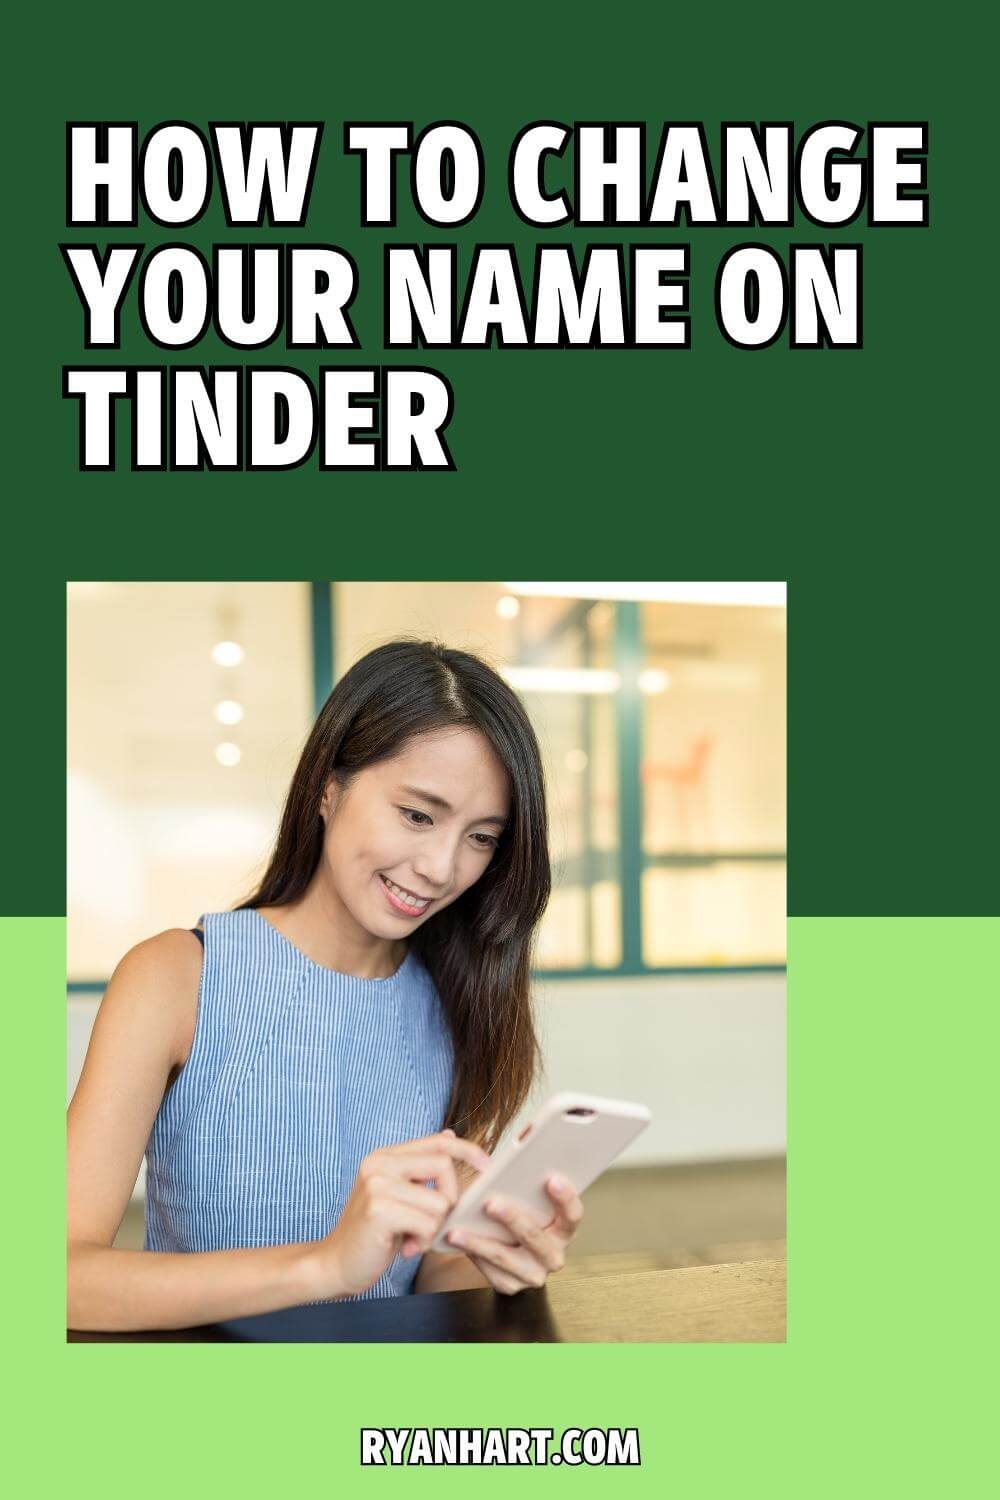 Woman using dating app